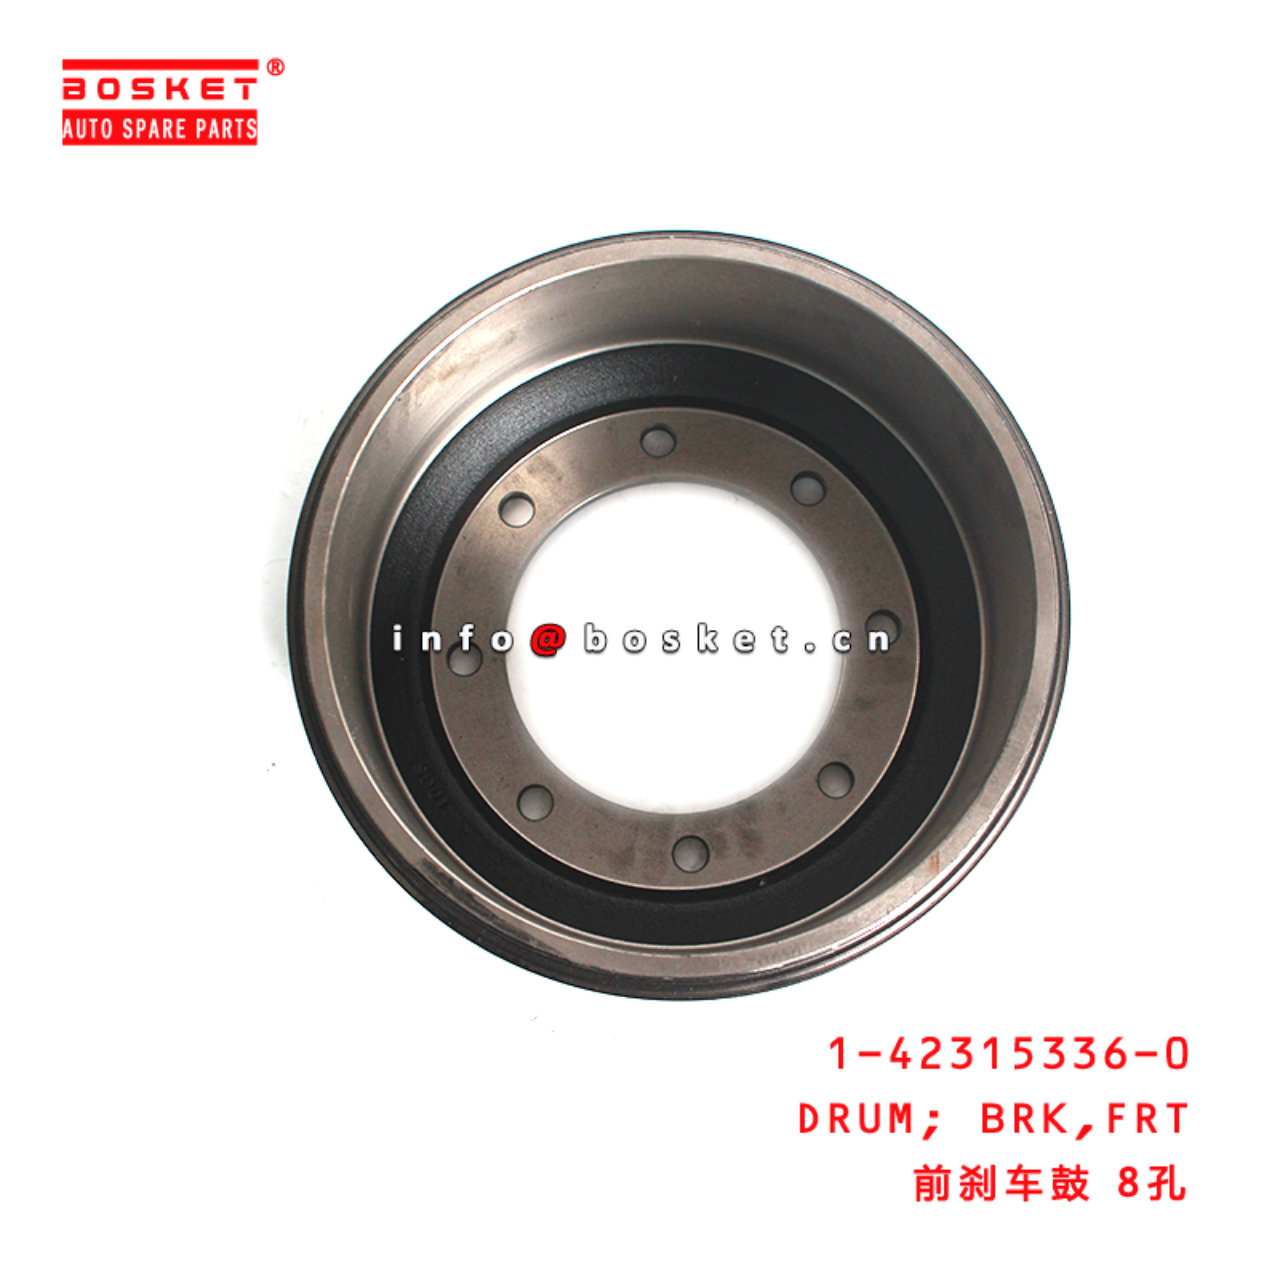 1-42315336-0 Front Brake Drum suitable for ISUZU FVR 1423153360